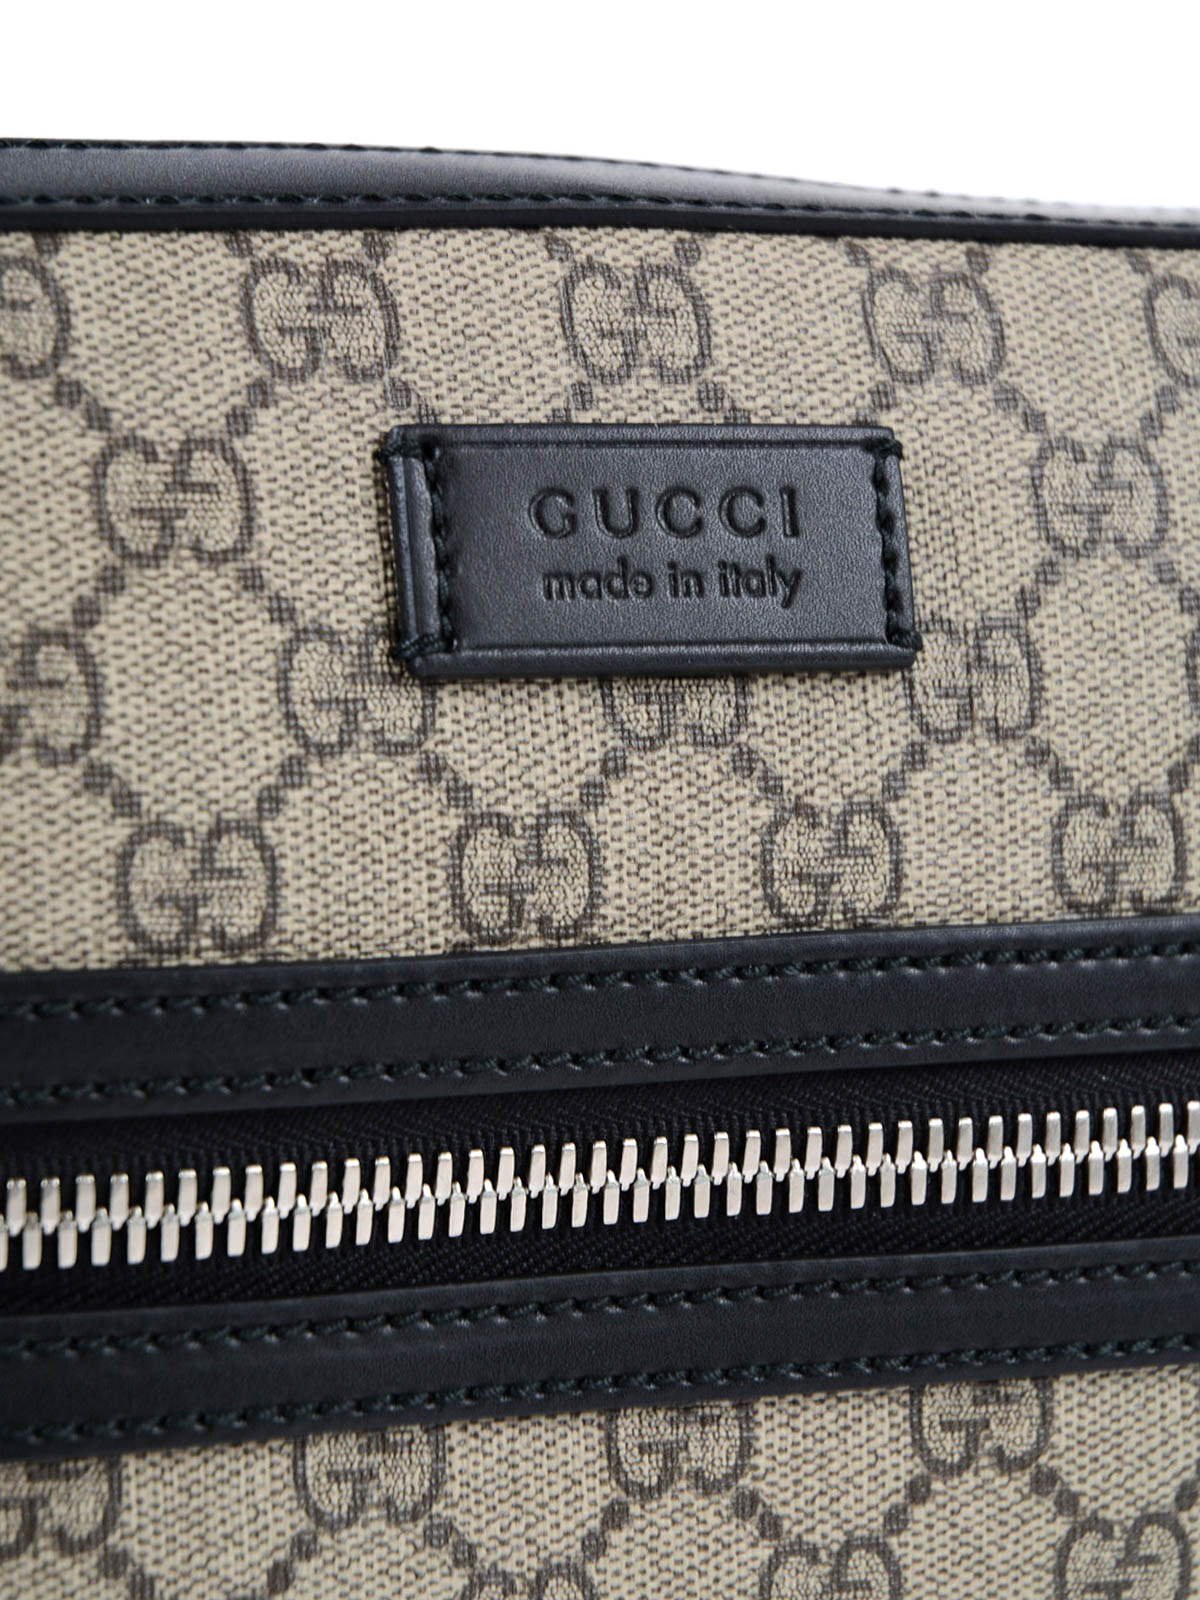 Shop Gucci Original Sling Bag online